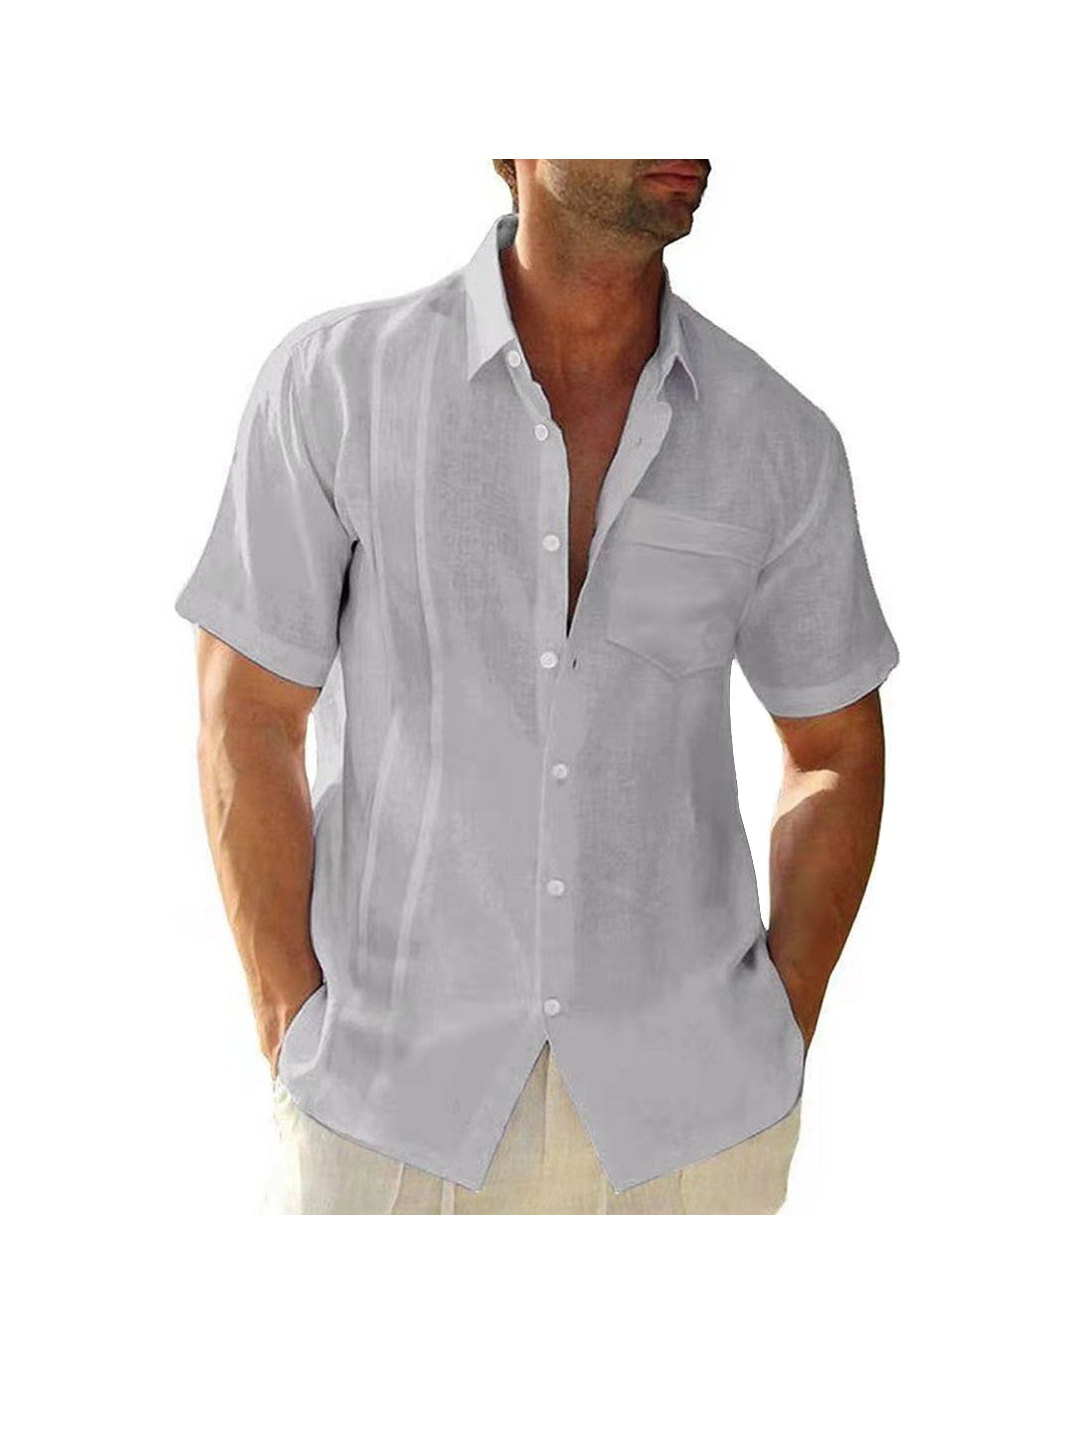 Lyle Short Sleeve Casual Shirt